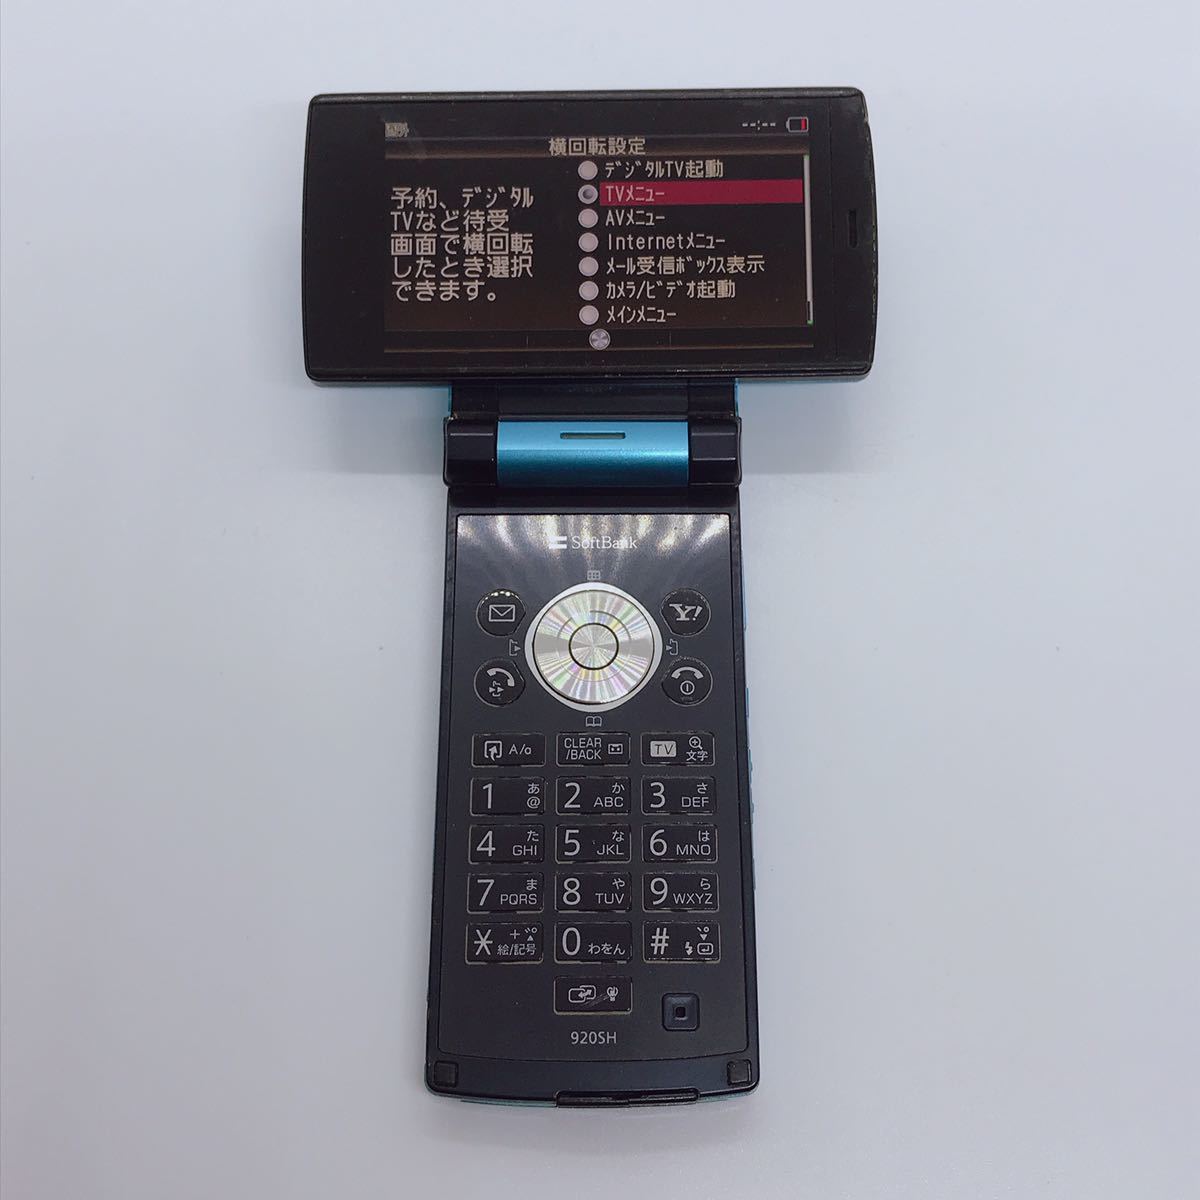 Softbank ソフトバンク SHARP シャープ 920SH ガラケー 携帯電話 a3b3cy_画像5